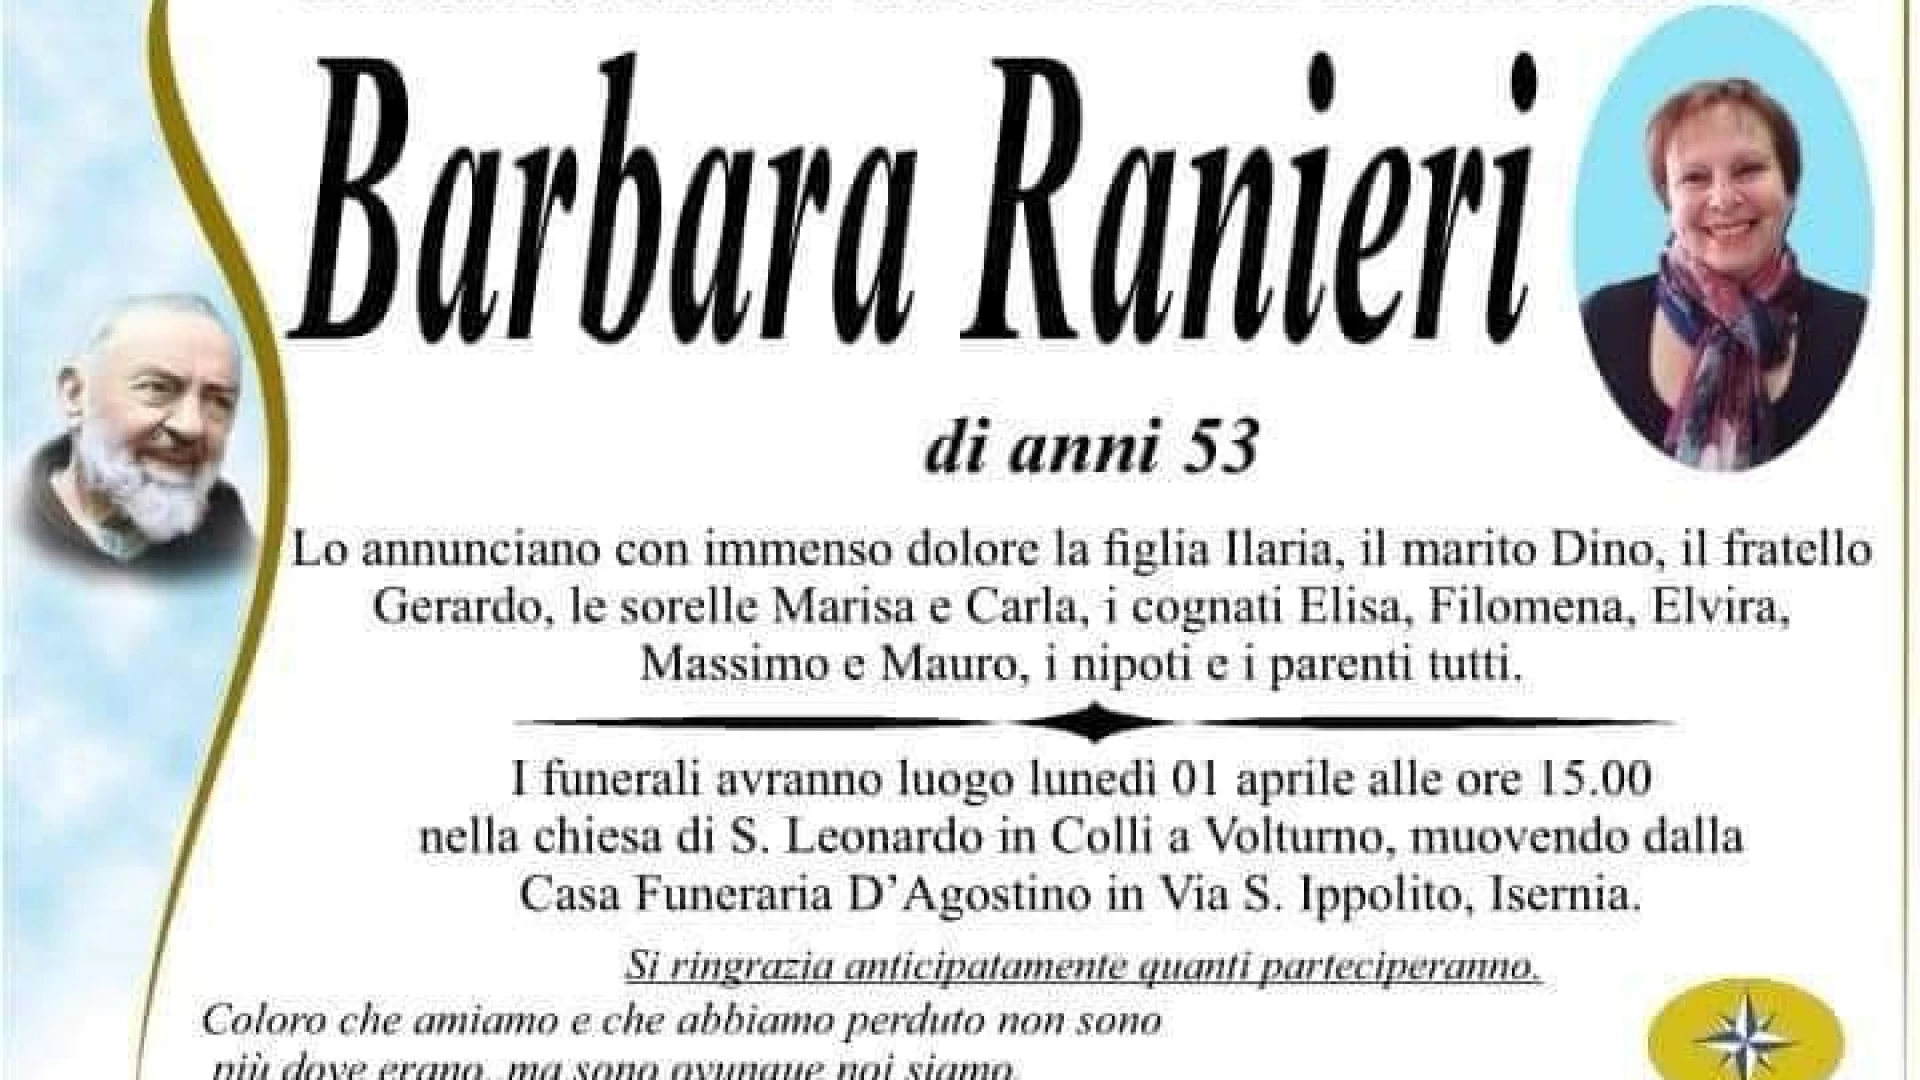 Colli a Volturno: lunedì 1 aprile i funerali di Barbara Ranieri.